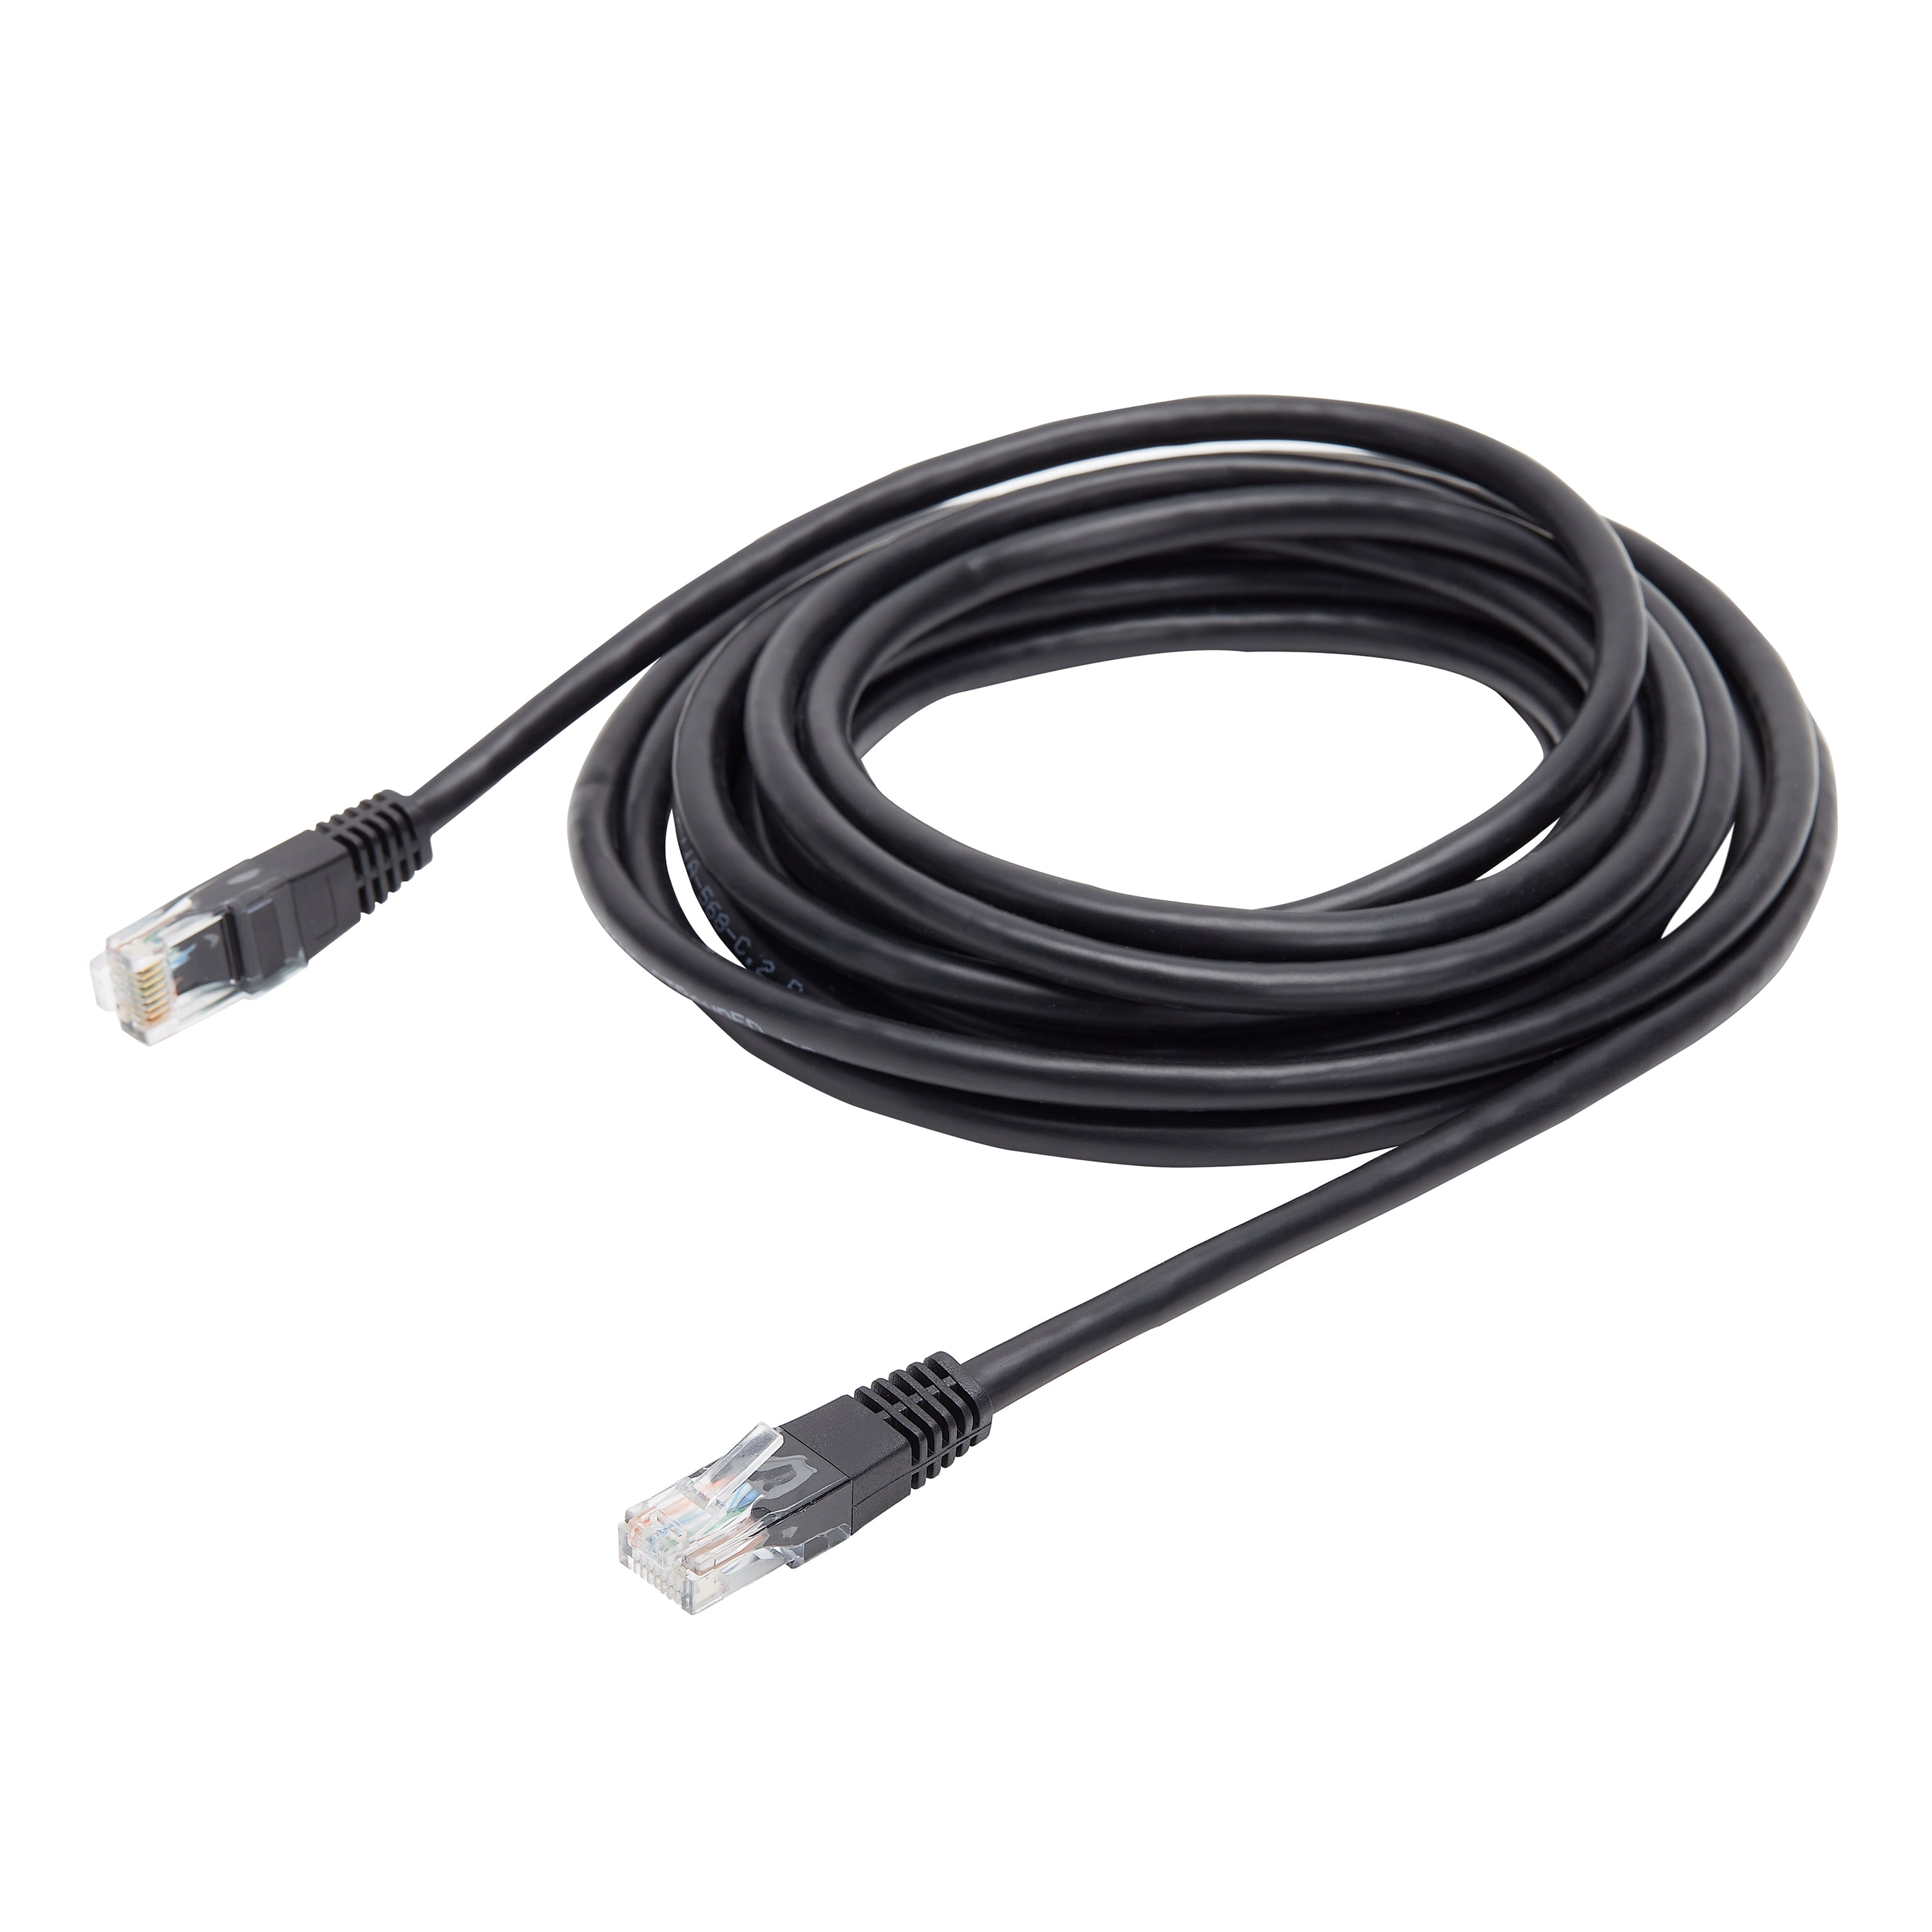 onn. Cat6 Ethernet Patch Cable, RJ45 Network Internet Stranded Cord, 25', Black